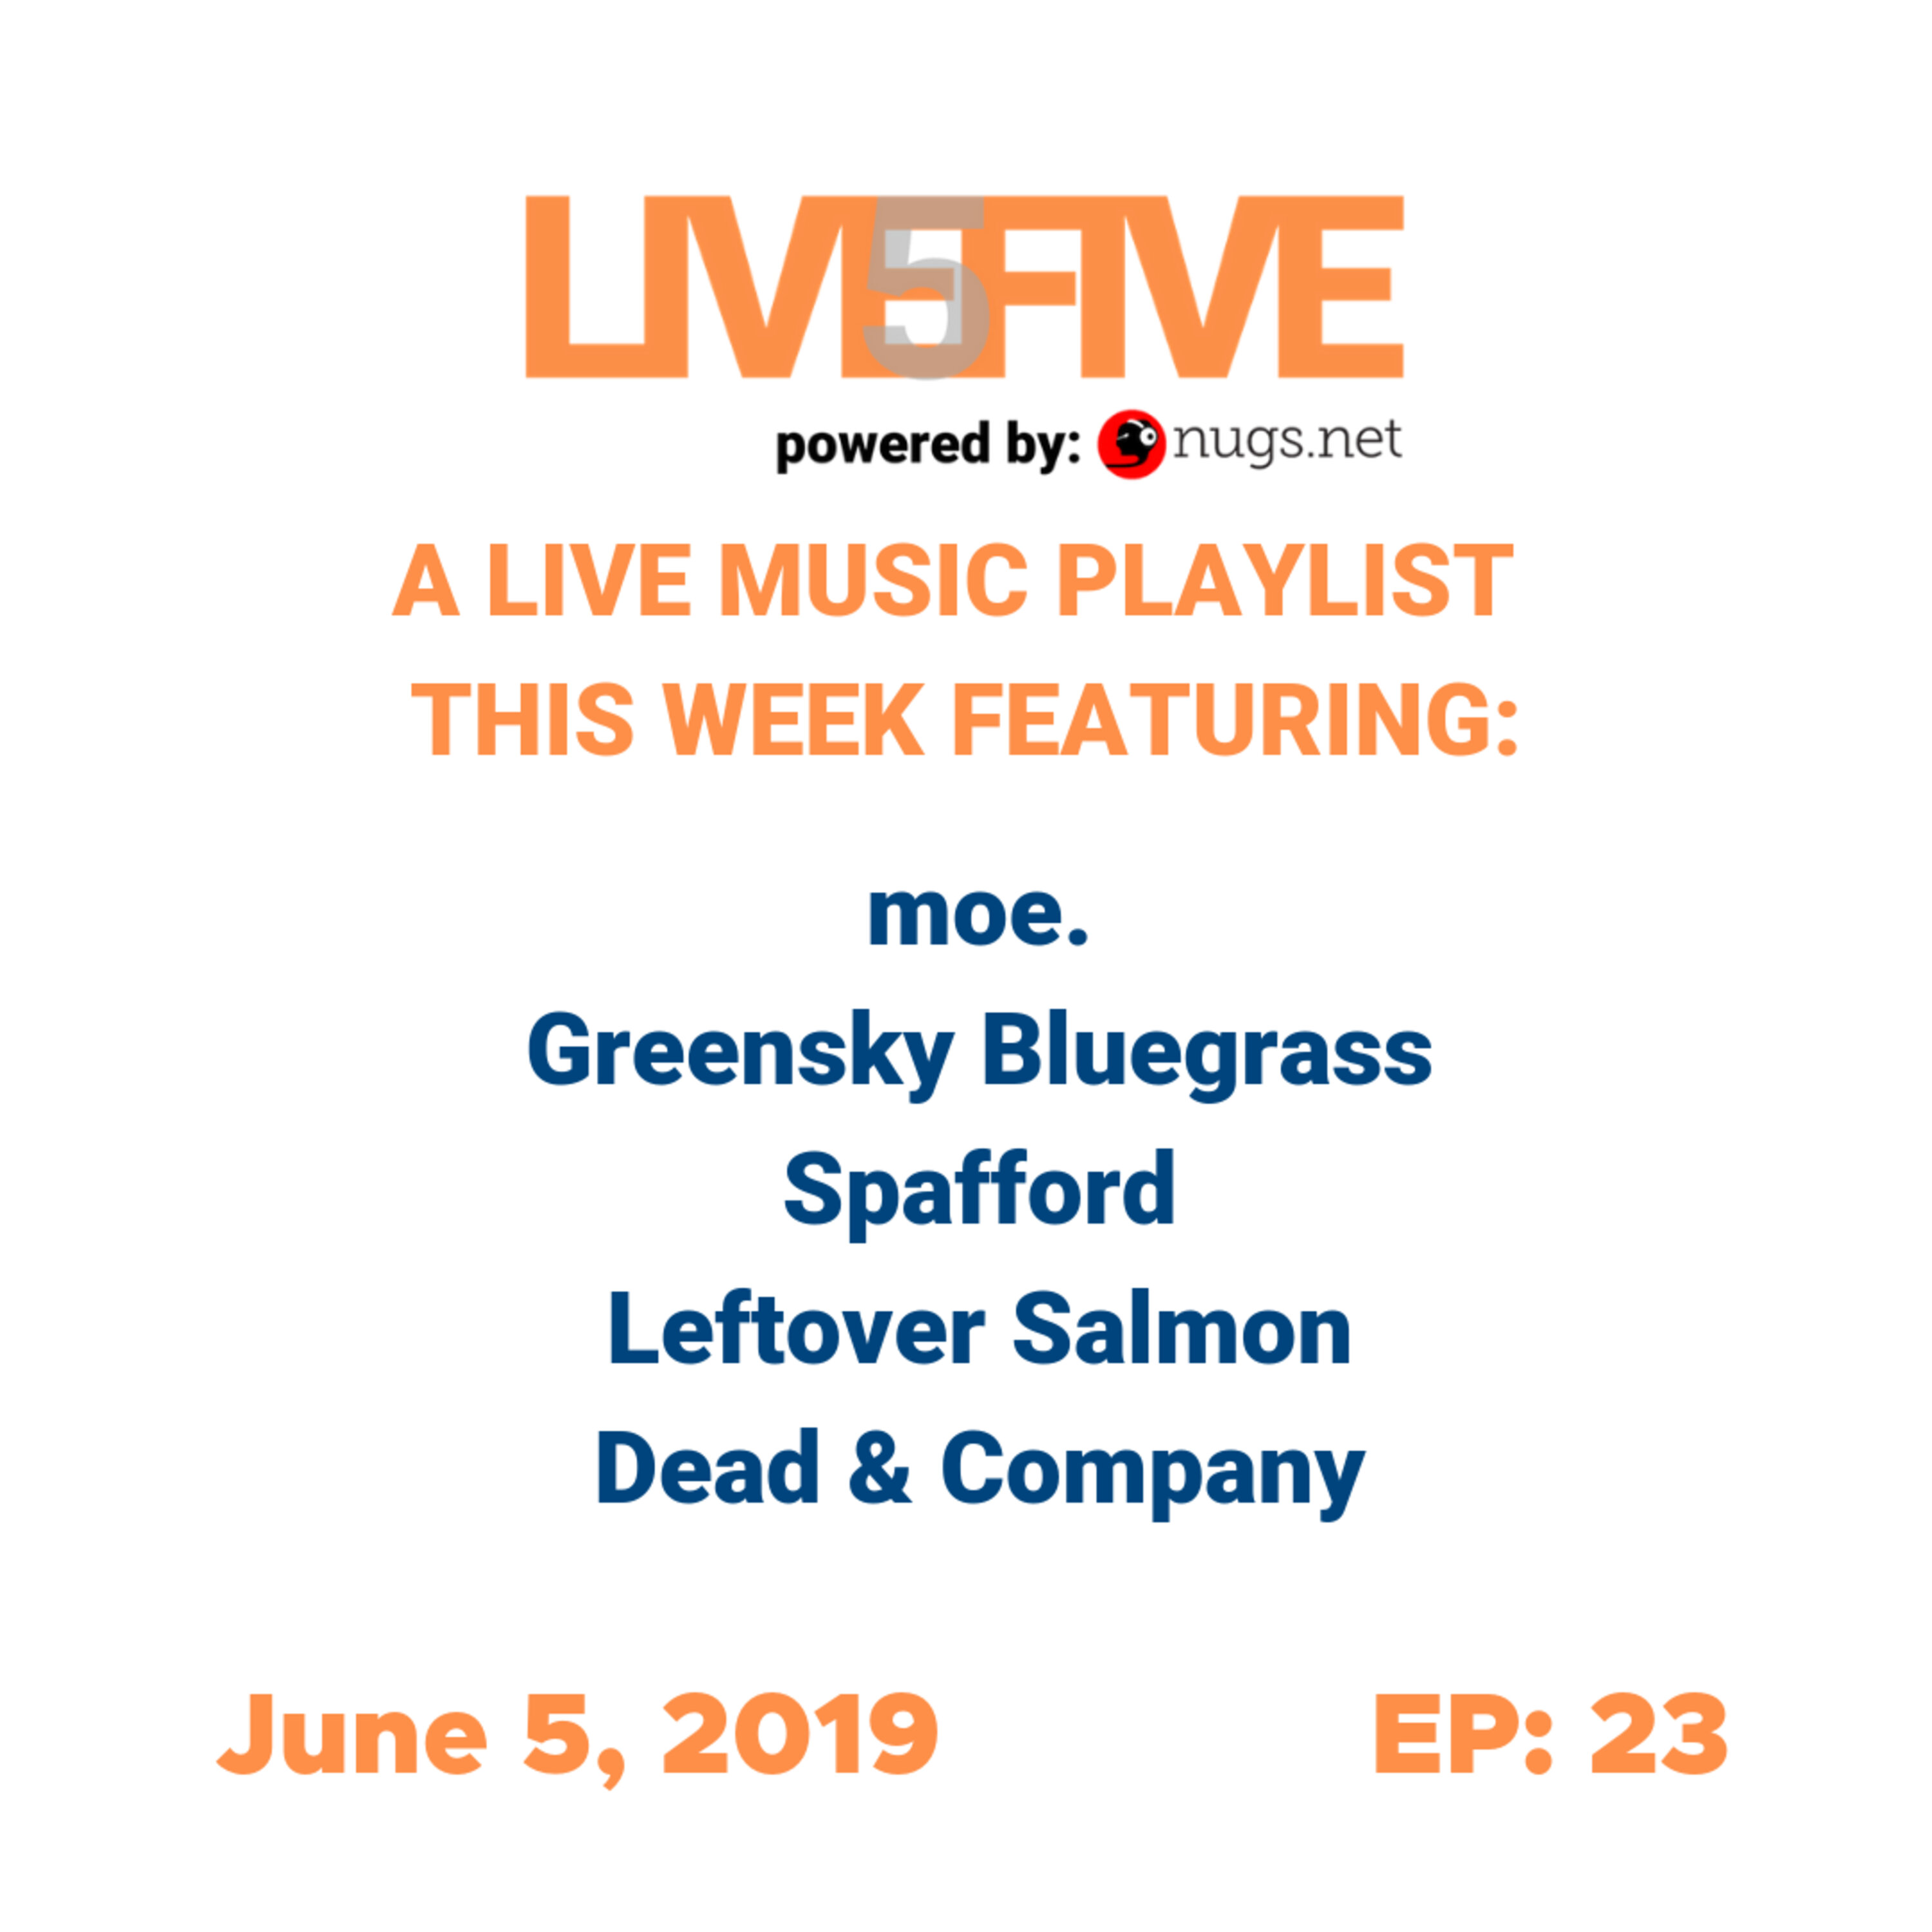 Live 5 - June 5, 2019. Image